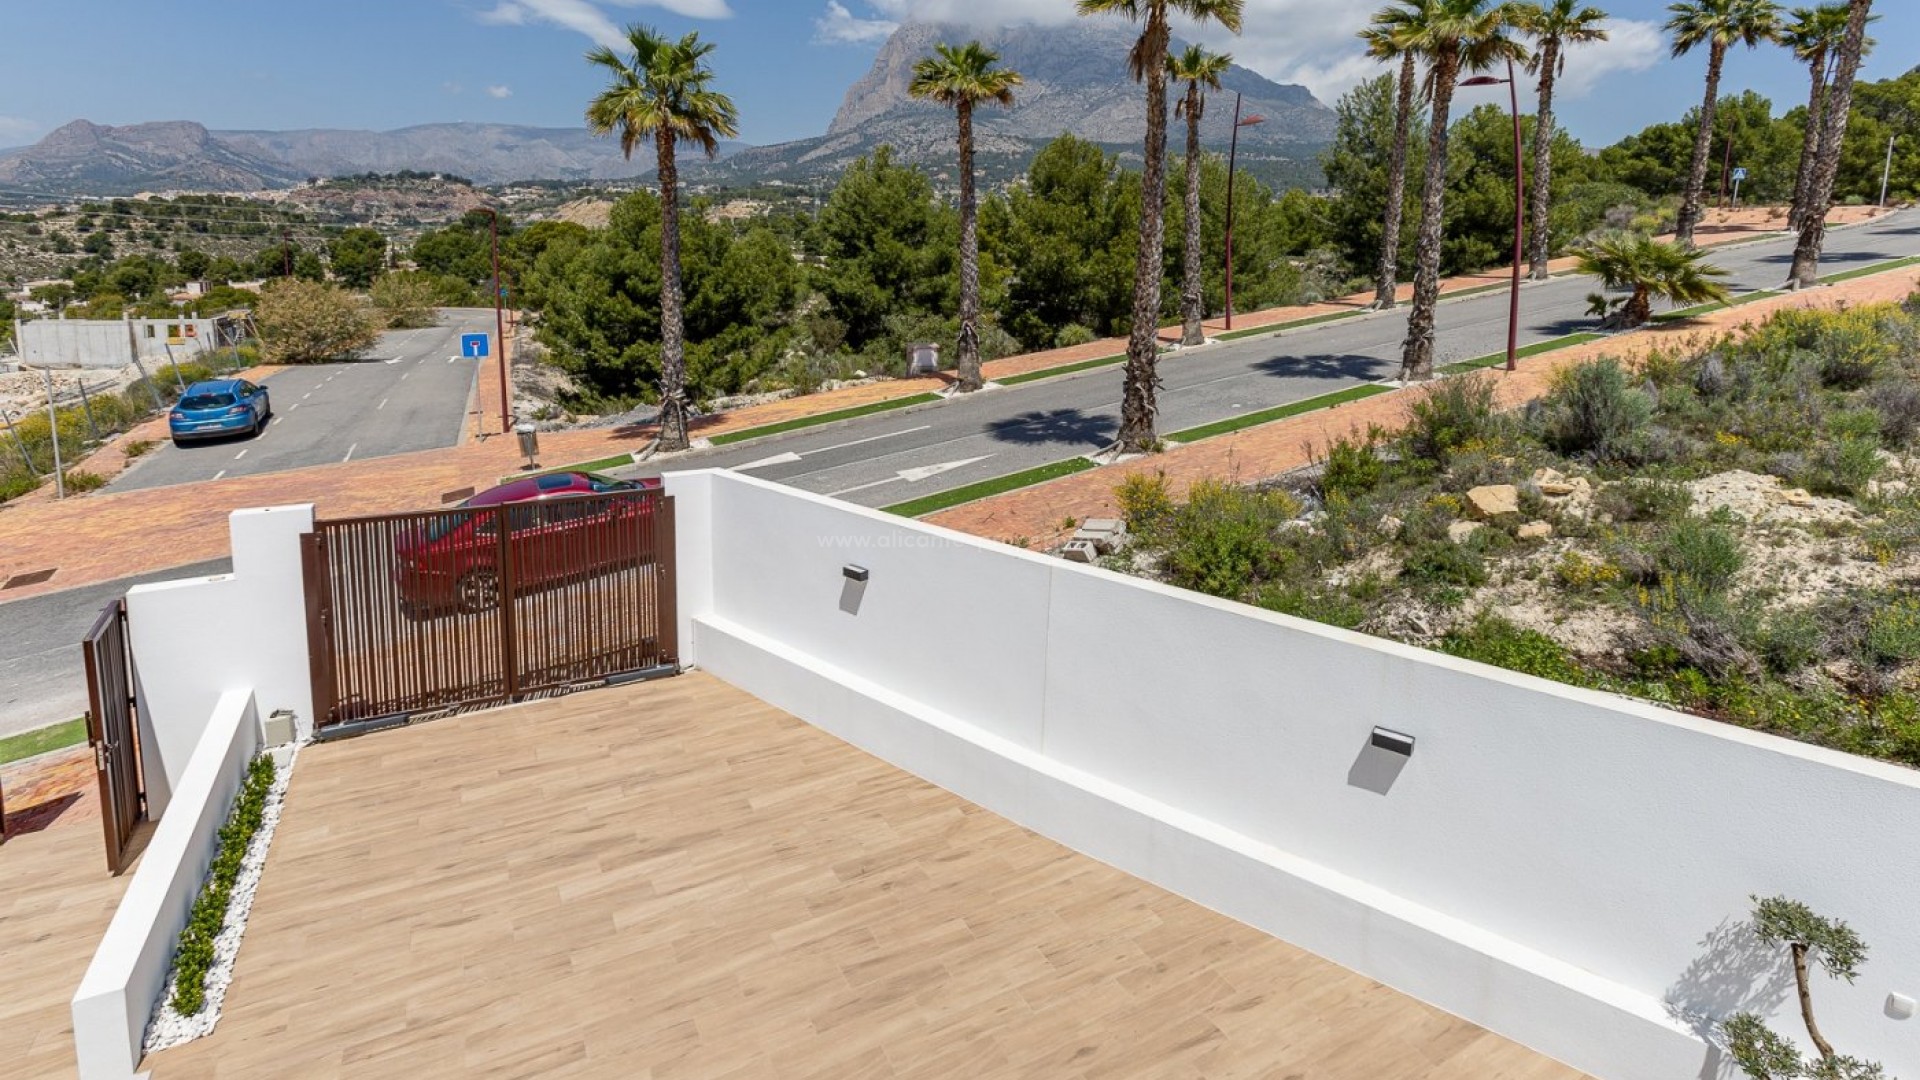 Brand new villas in Balcon de Finestrat, 3 bedrooms, 2 bathrooms, beautiful terrace and private garden with pool, 10 min to Benidorm